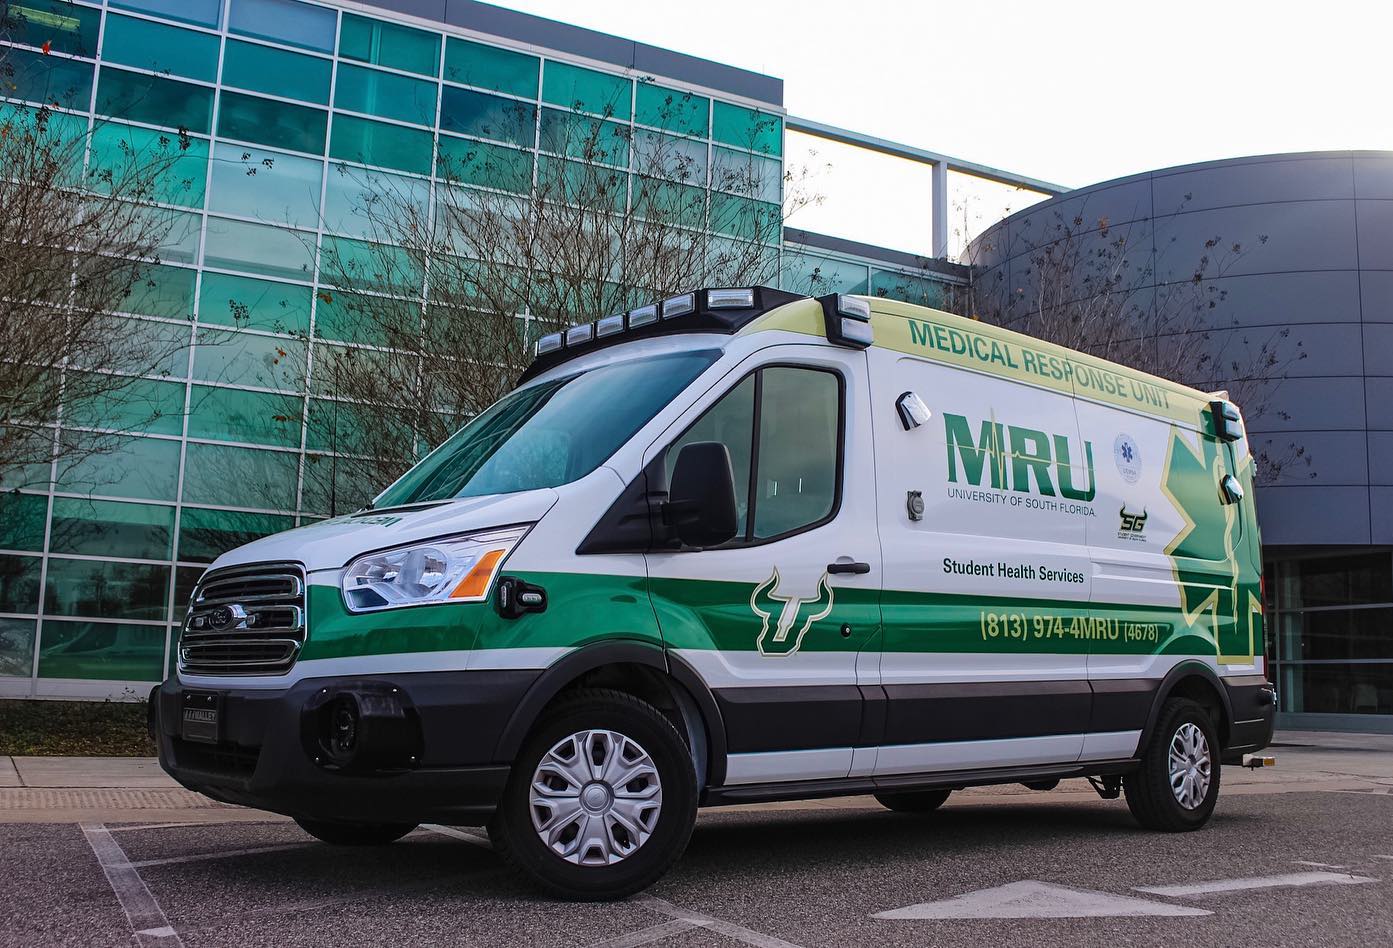 Medical Response Unit (MRU)